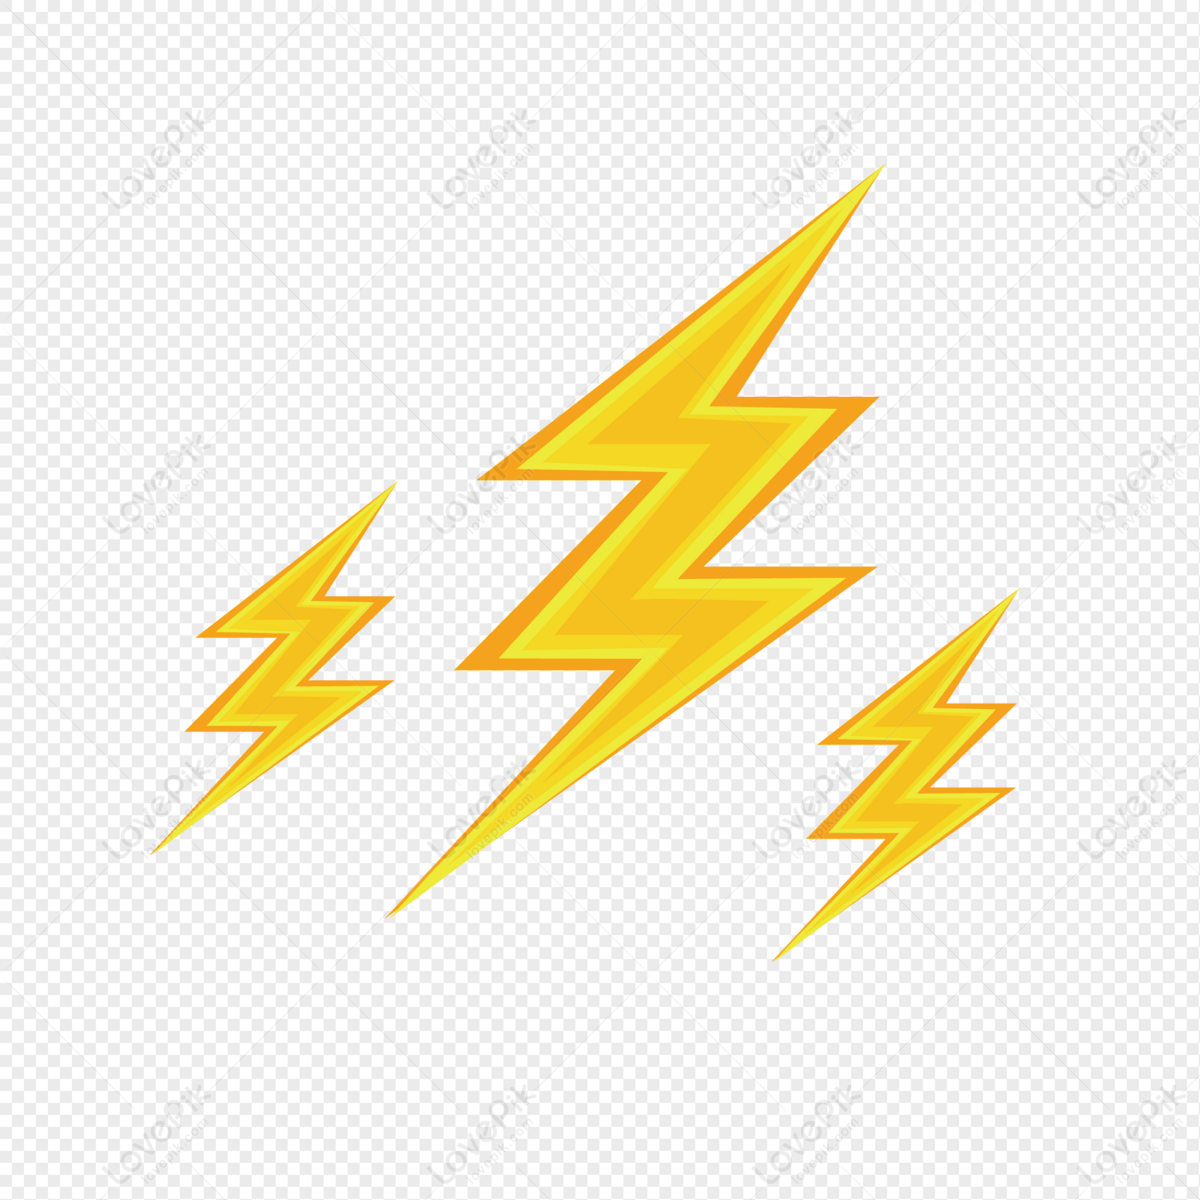 Lightning PNG Transparent Background And Clipart Image For Free Download -  Lovepik | 401543280